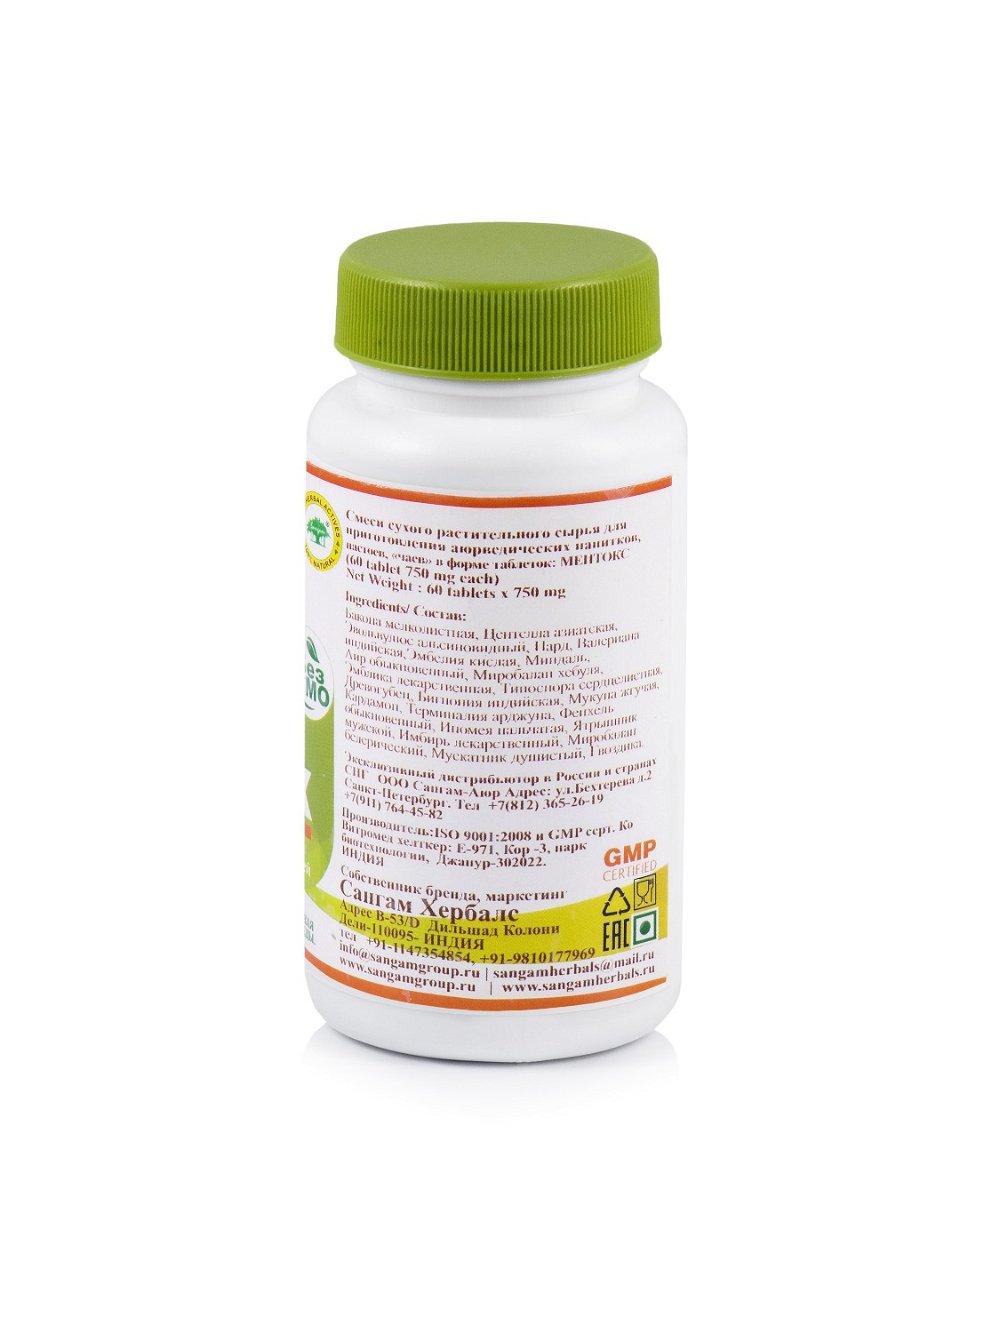 Ментокс Sangam Herbals (60 таблеток), 